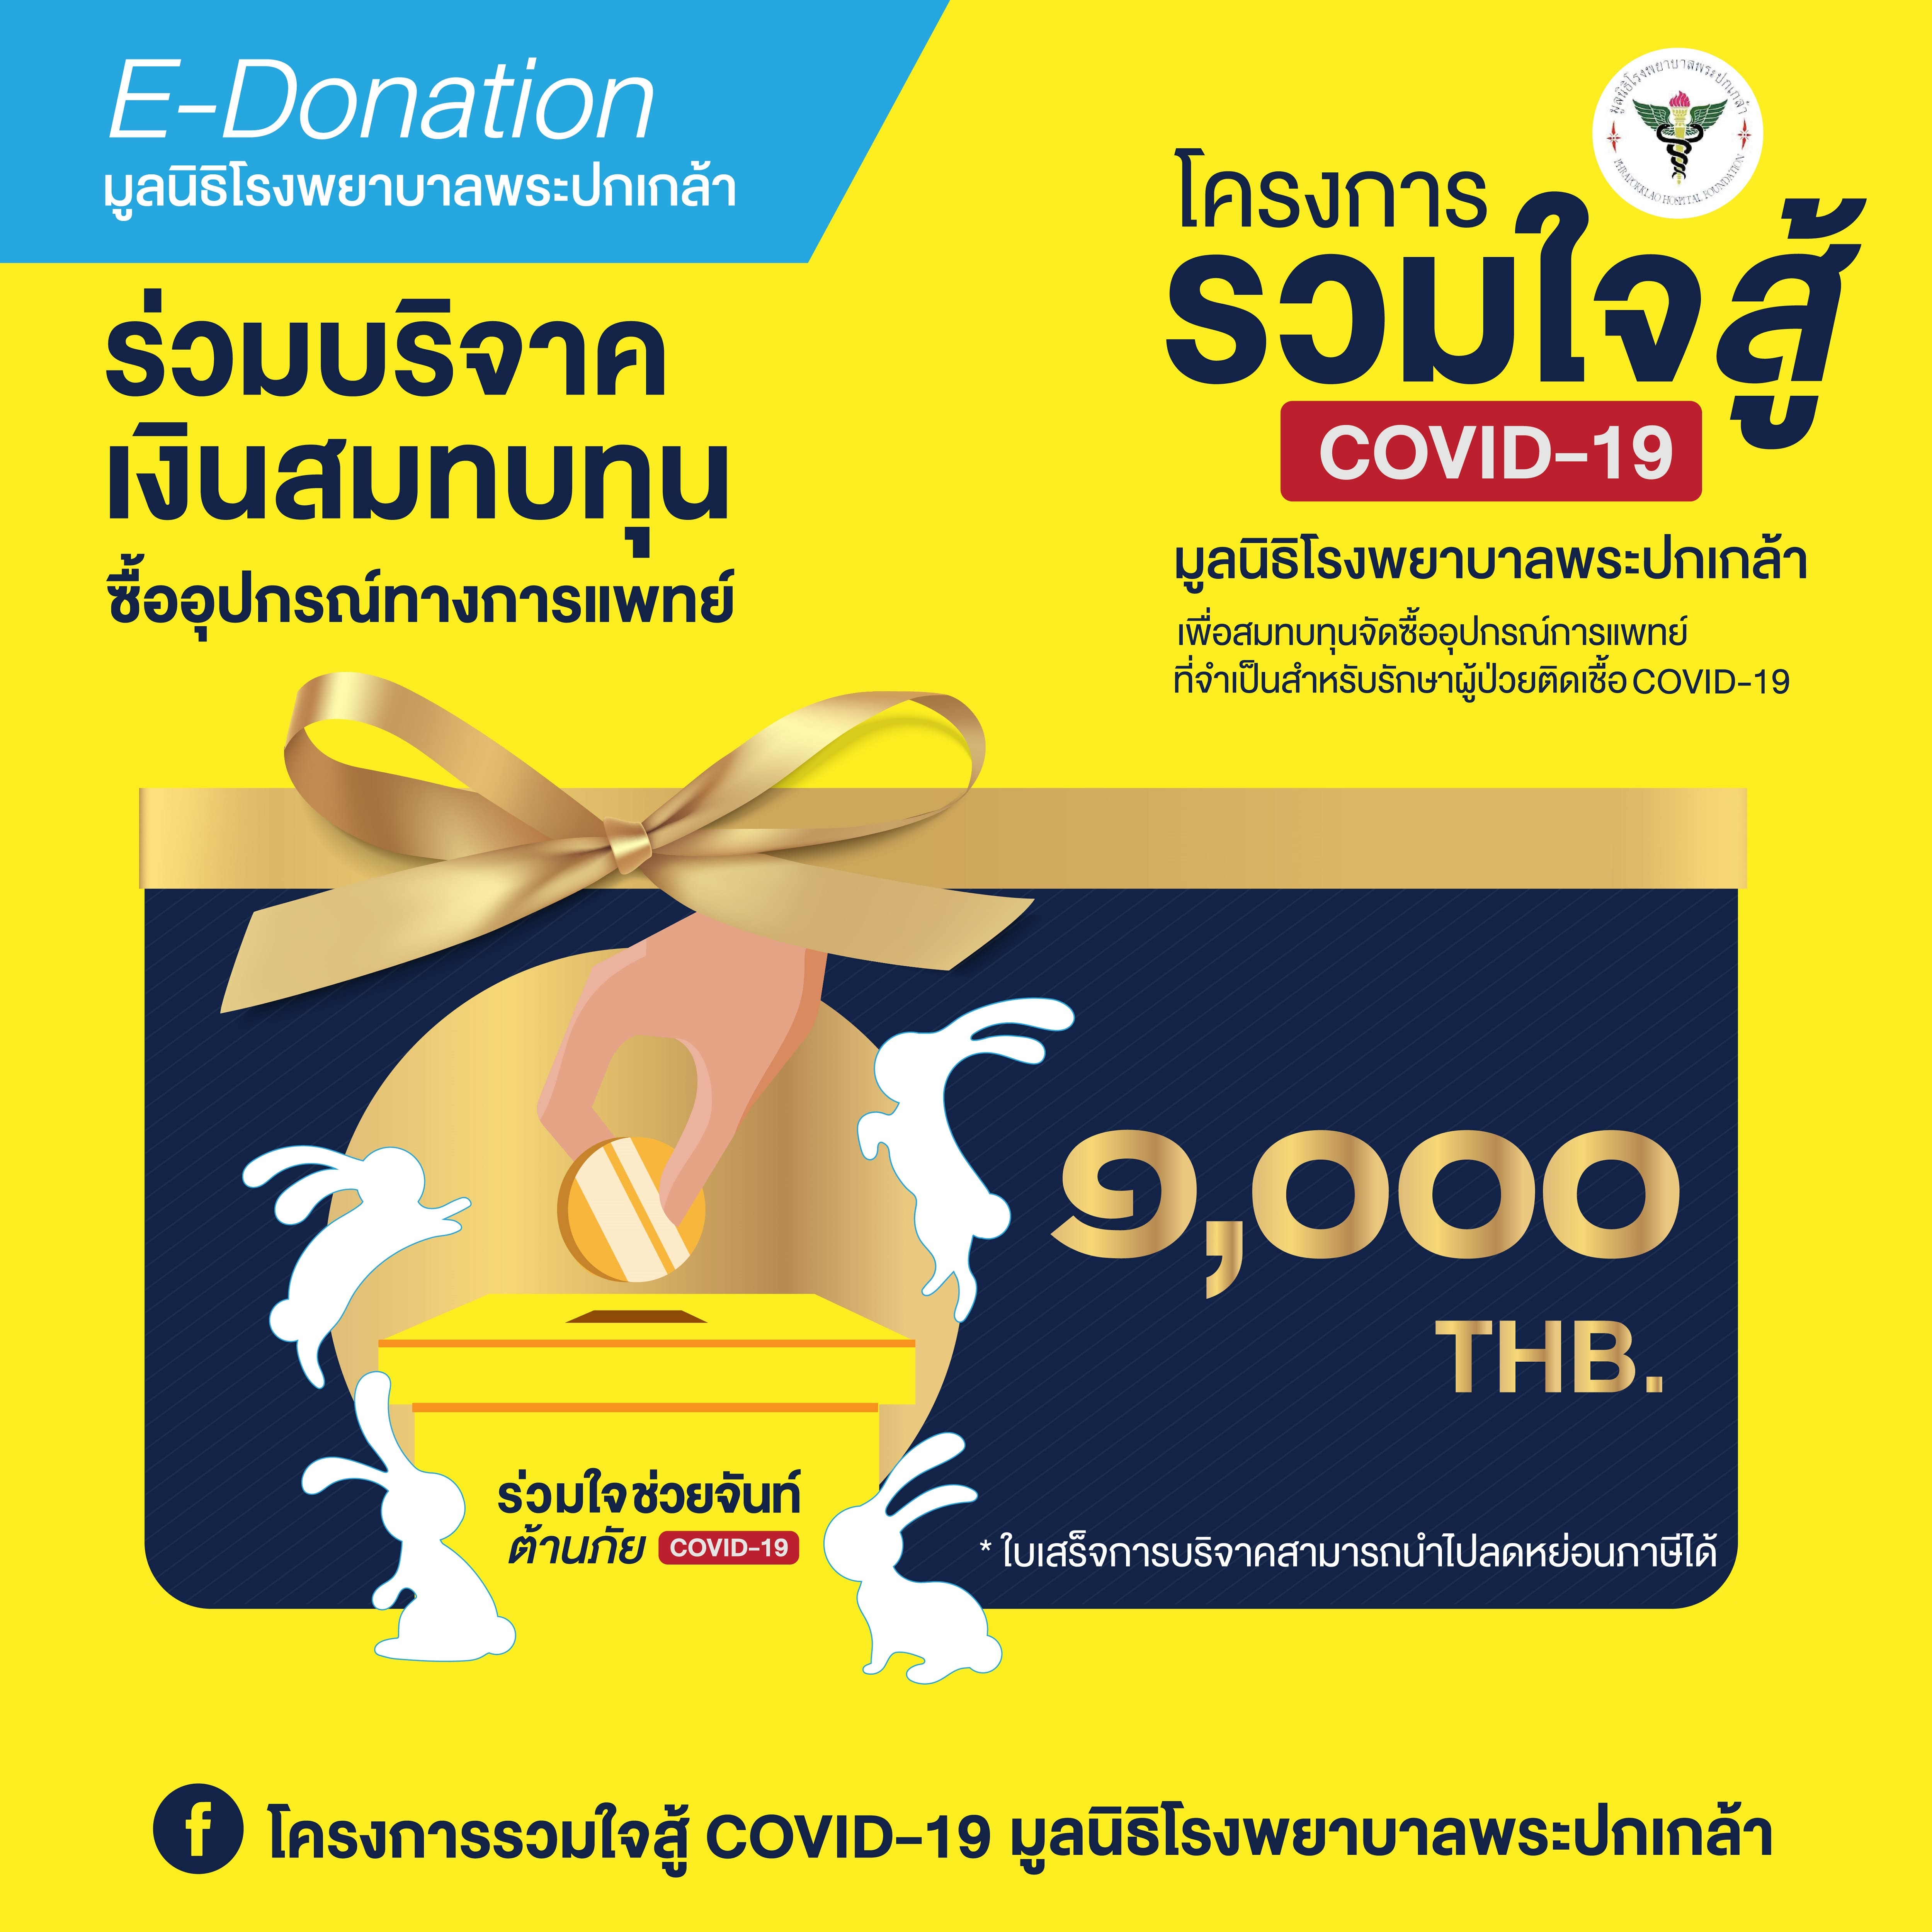 [E-Donation] โครงการป้องกันและช่วยเหลือสถานการณ์แพร่ระบาดของโควิด-19 (Covid-19) มูลนิธิโรงพยาบาลพระปกเกล้า จำนวน 1000 บาท